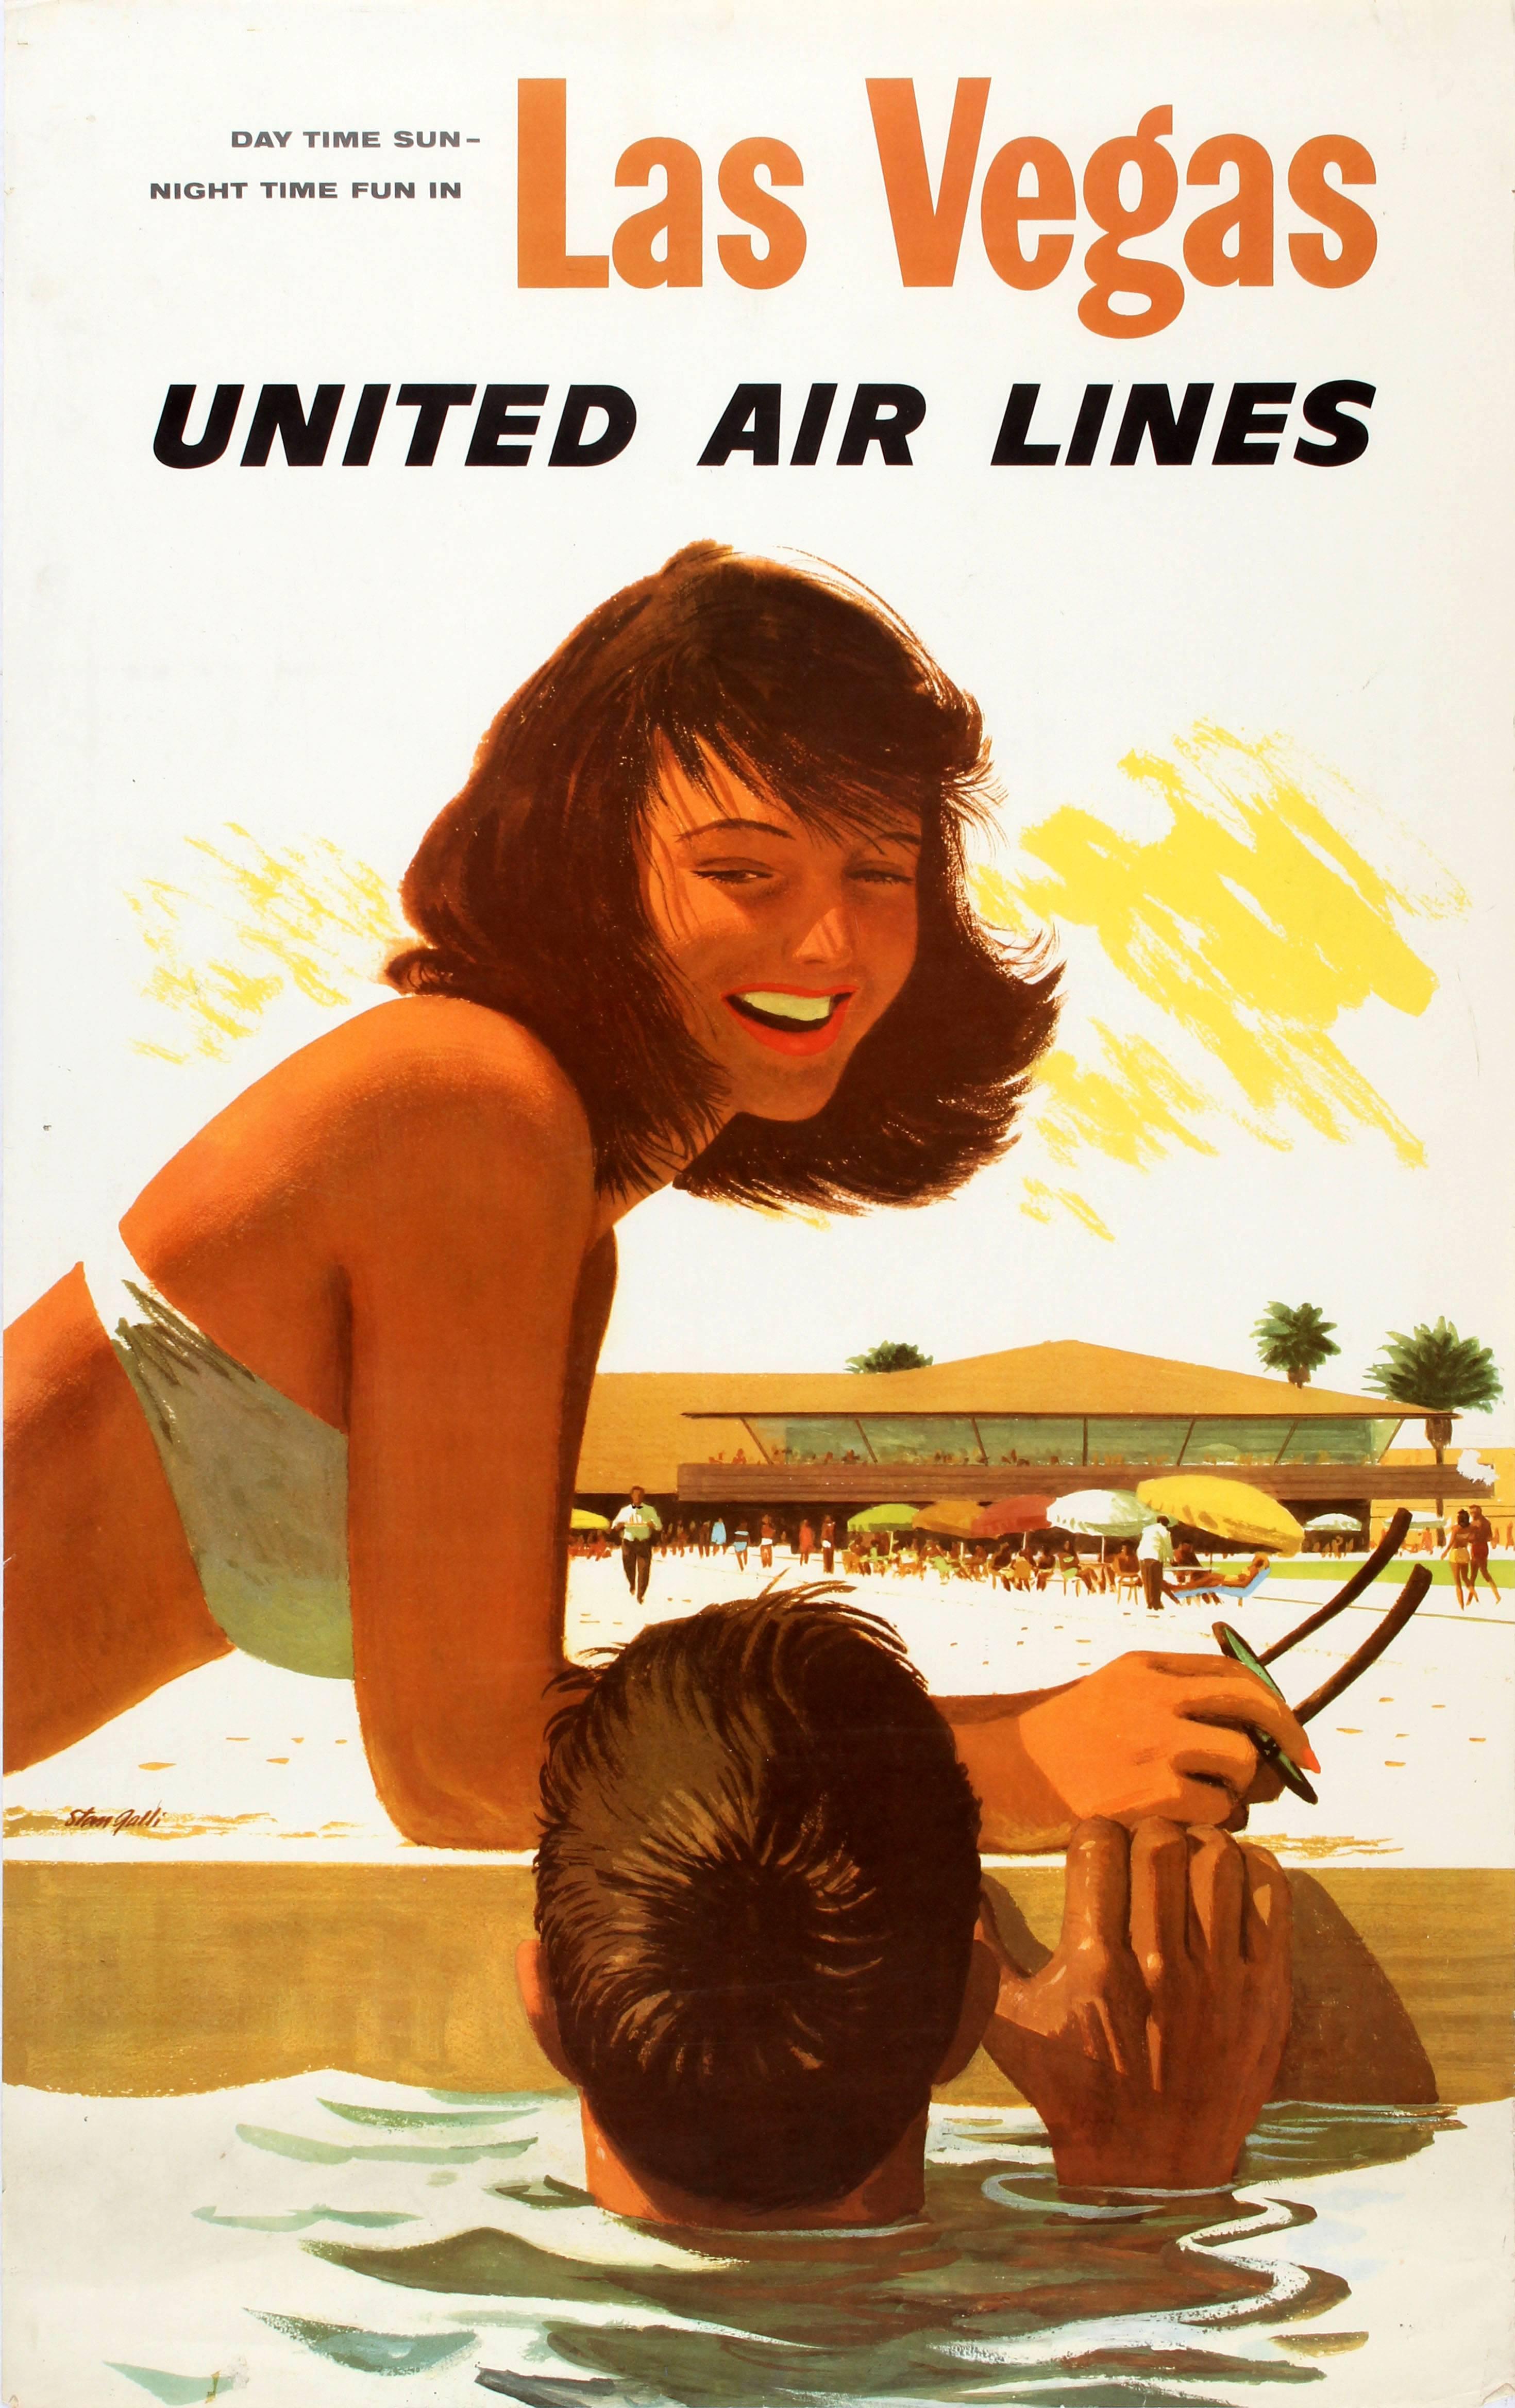 Stan Galli Print - Original Vintage Las Vegas United Air Lines Poster - Day Time Sun Night Time Fun